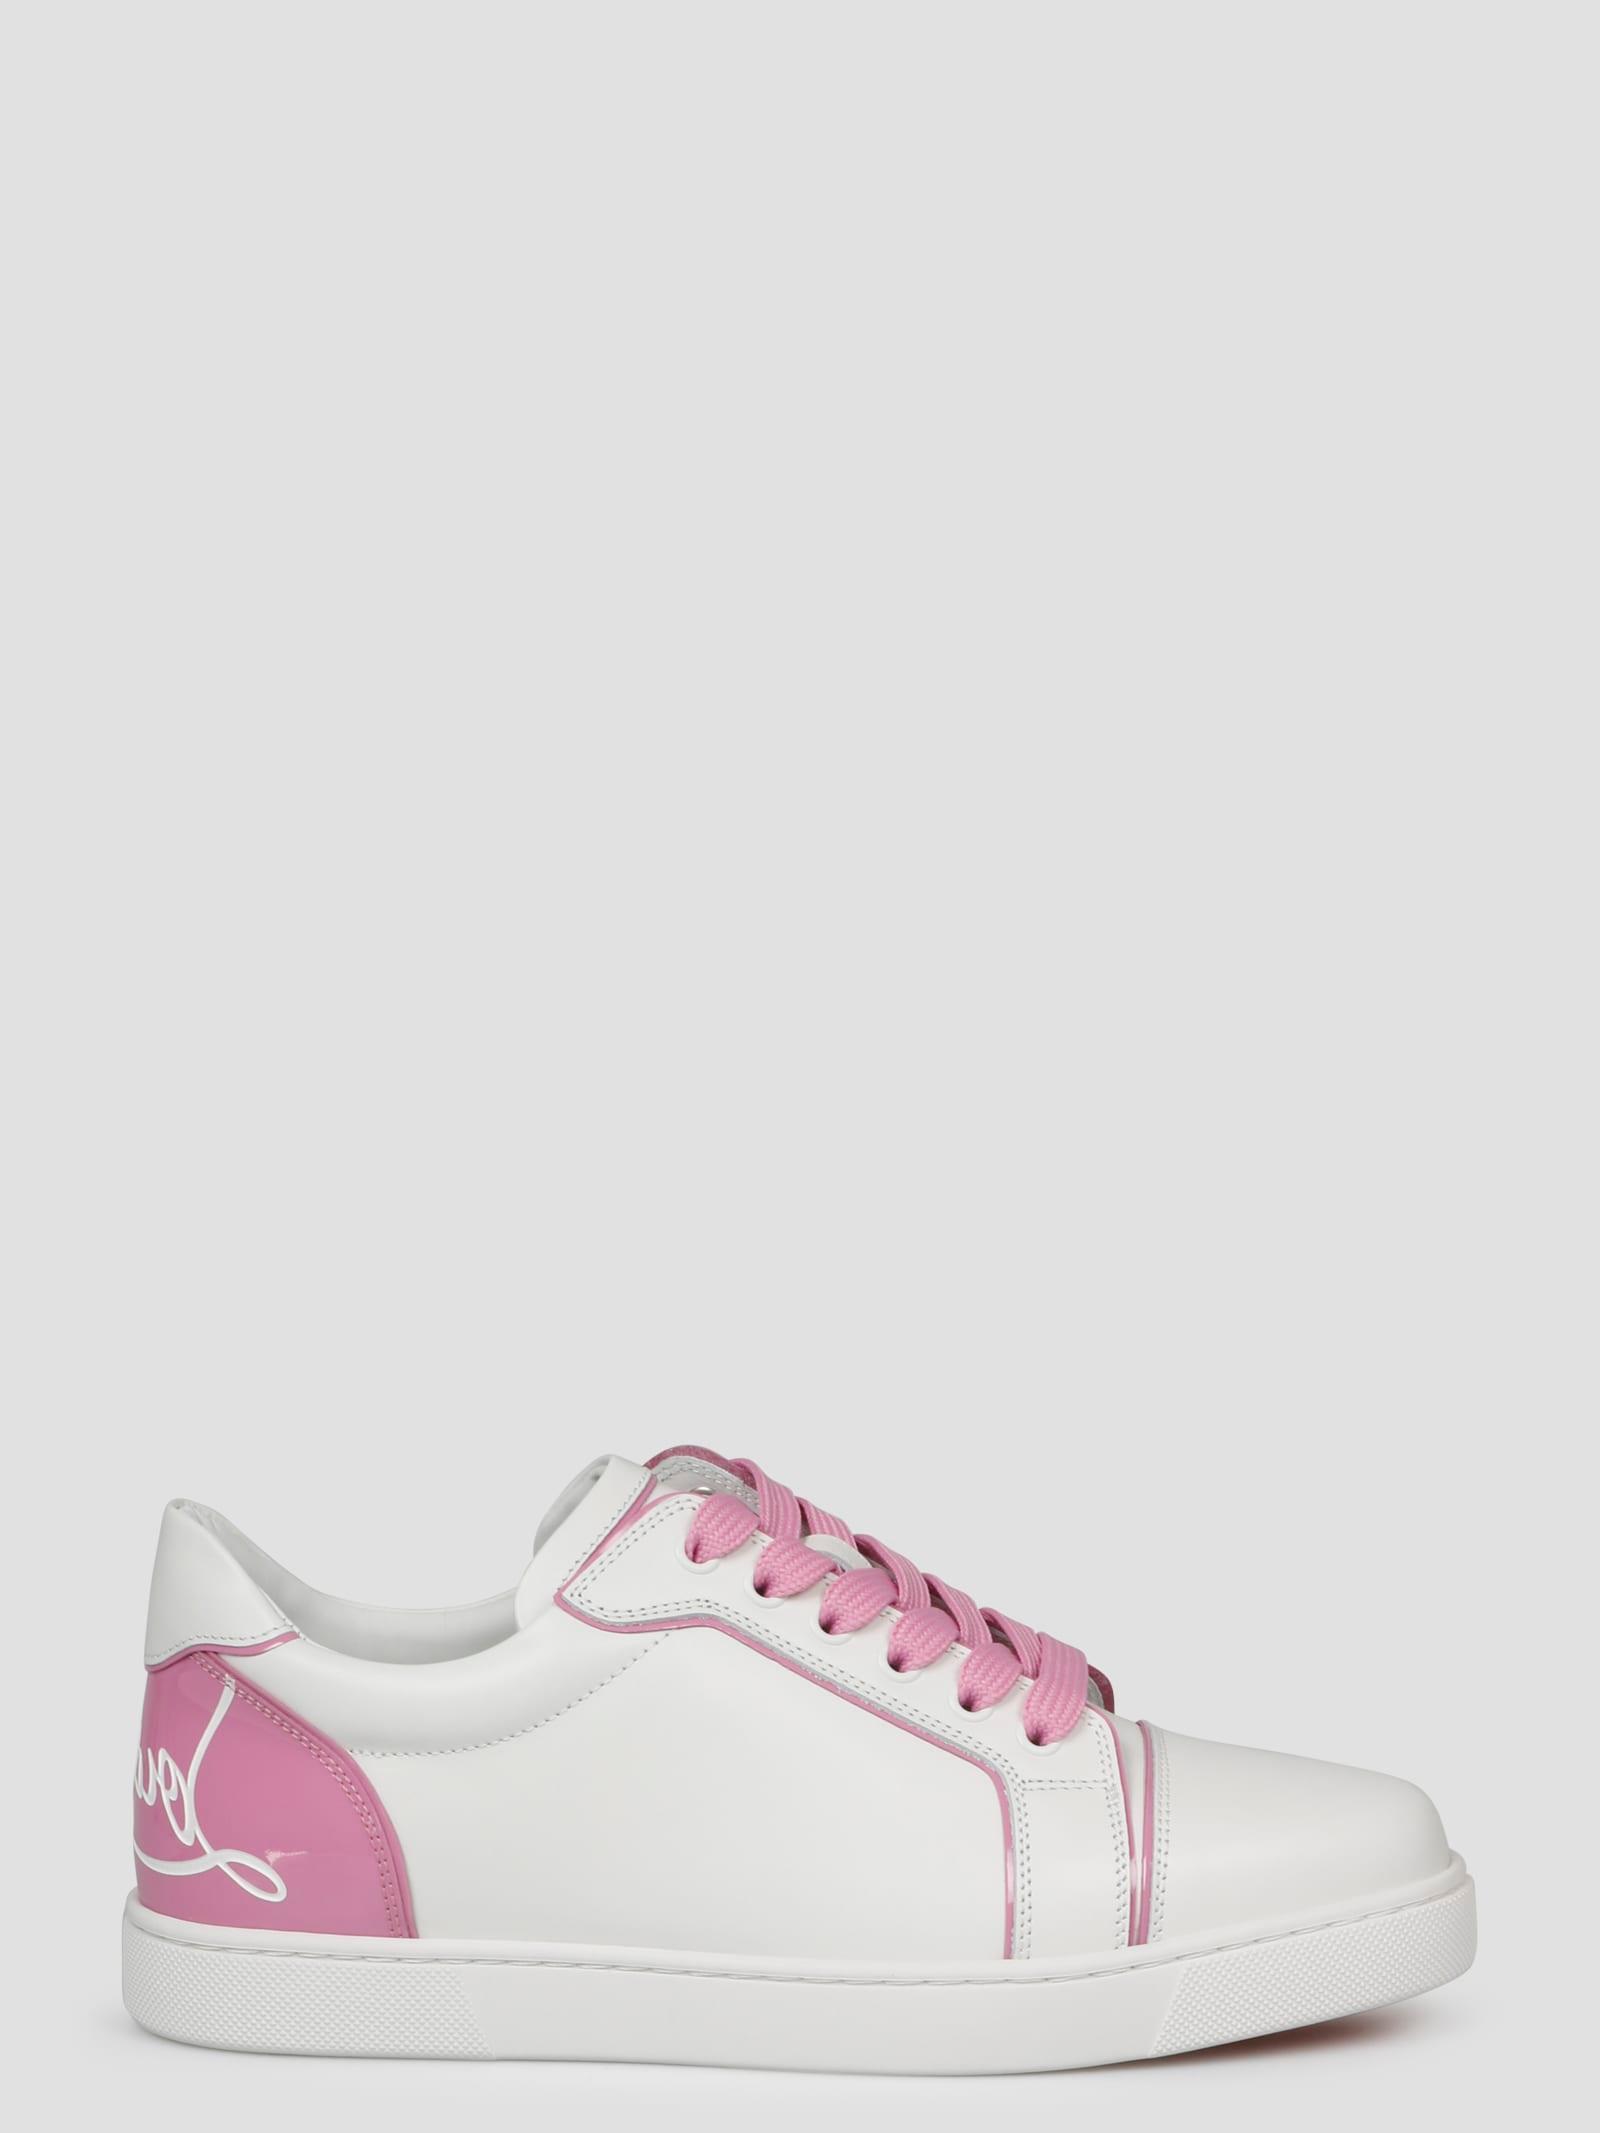 Christian Louboutin Fun Vieira Flat Sneakers in Pink | Lyst